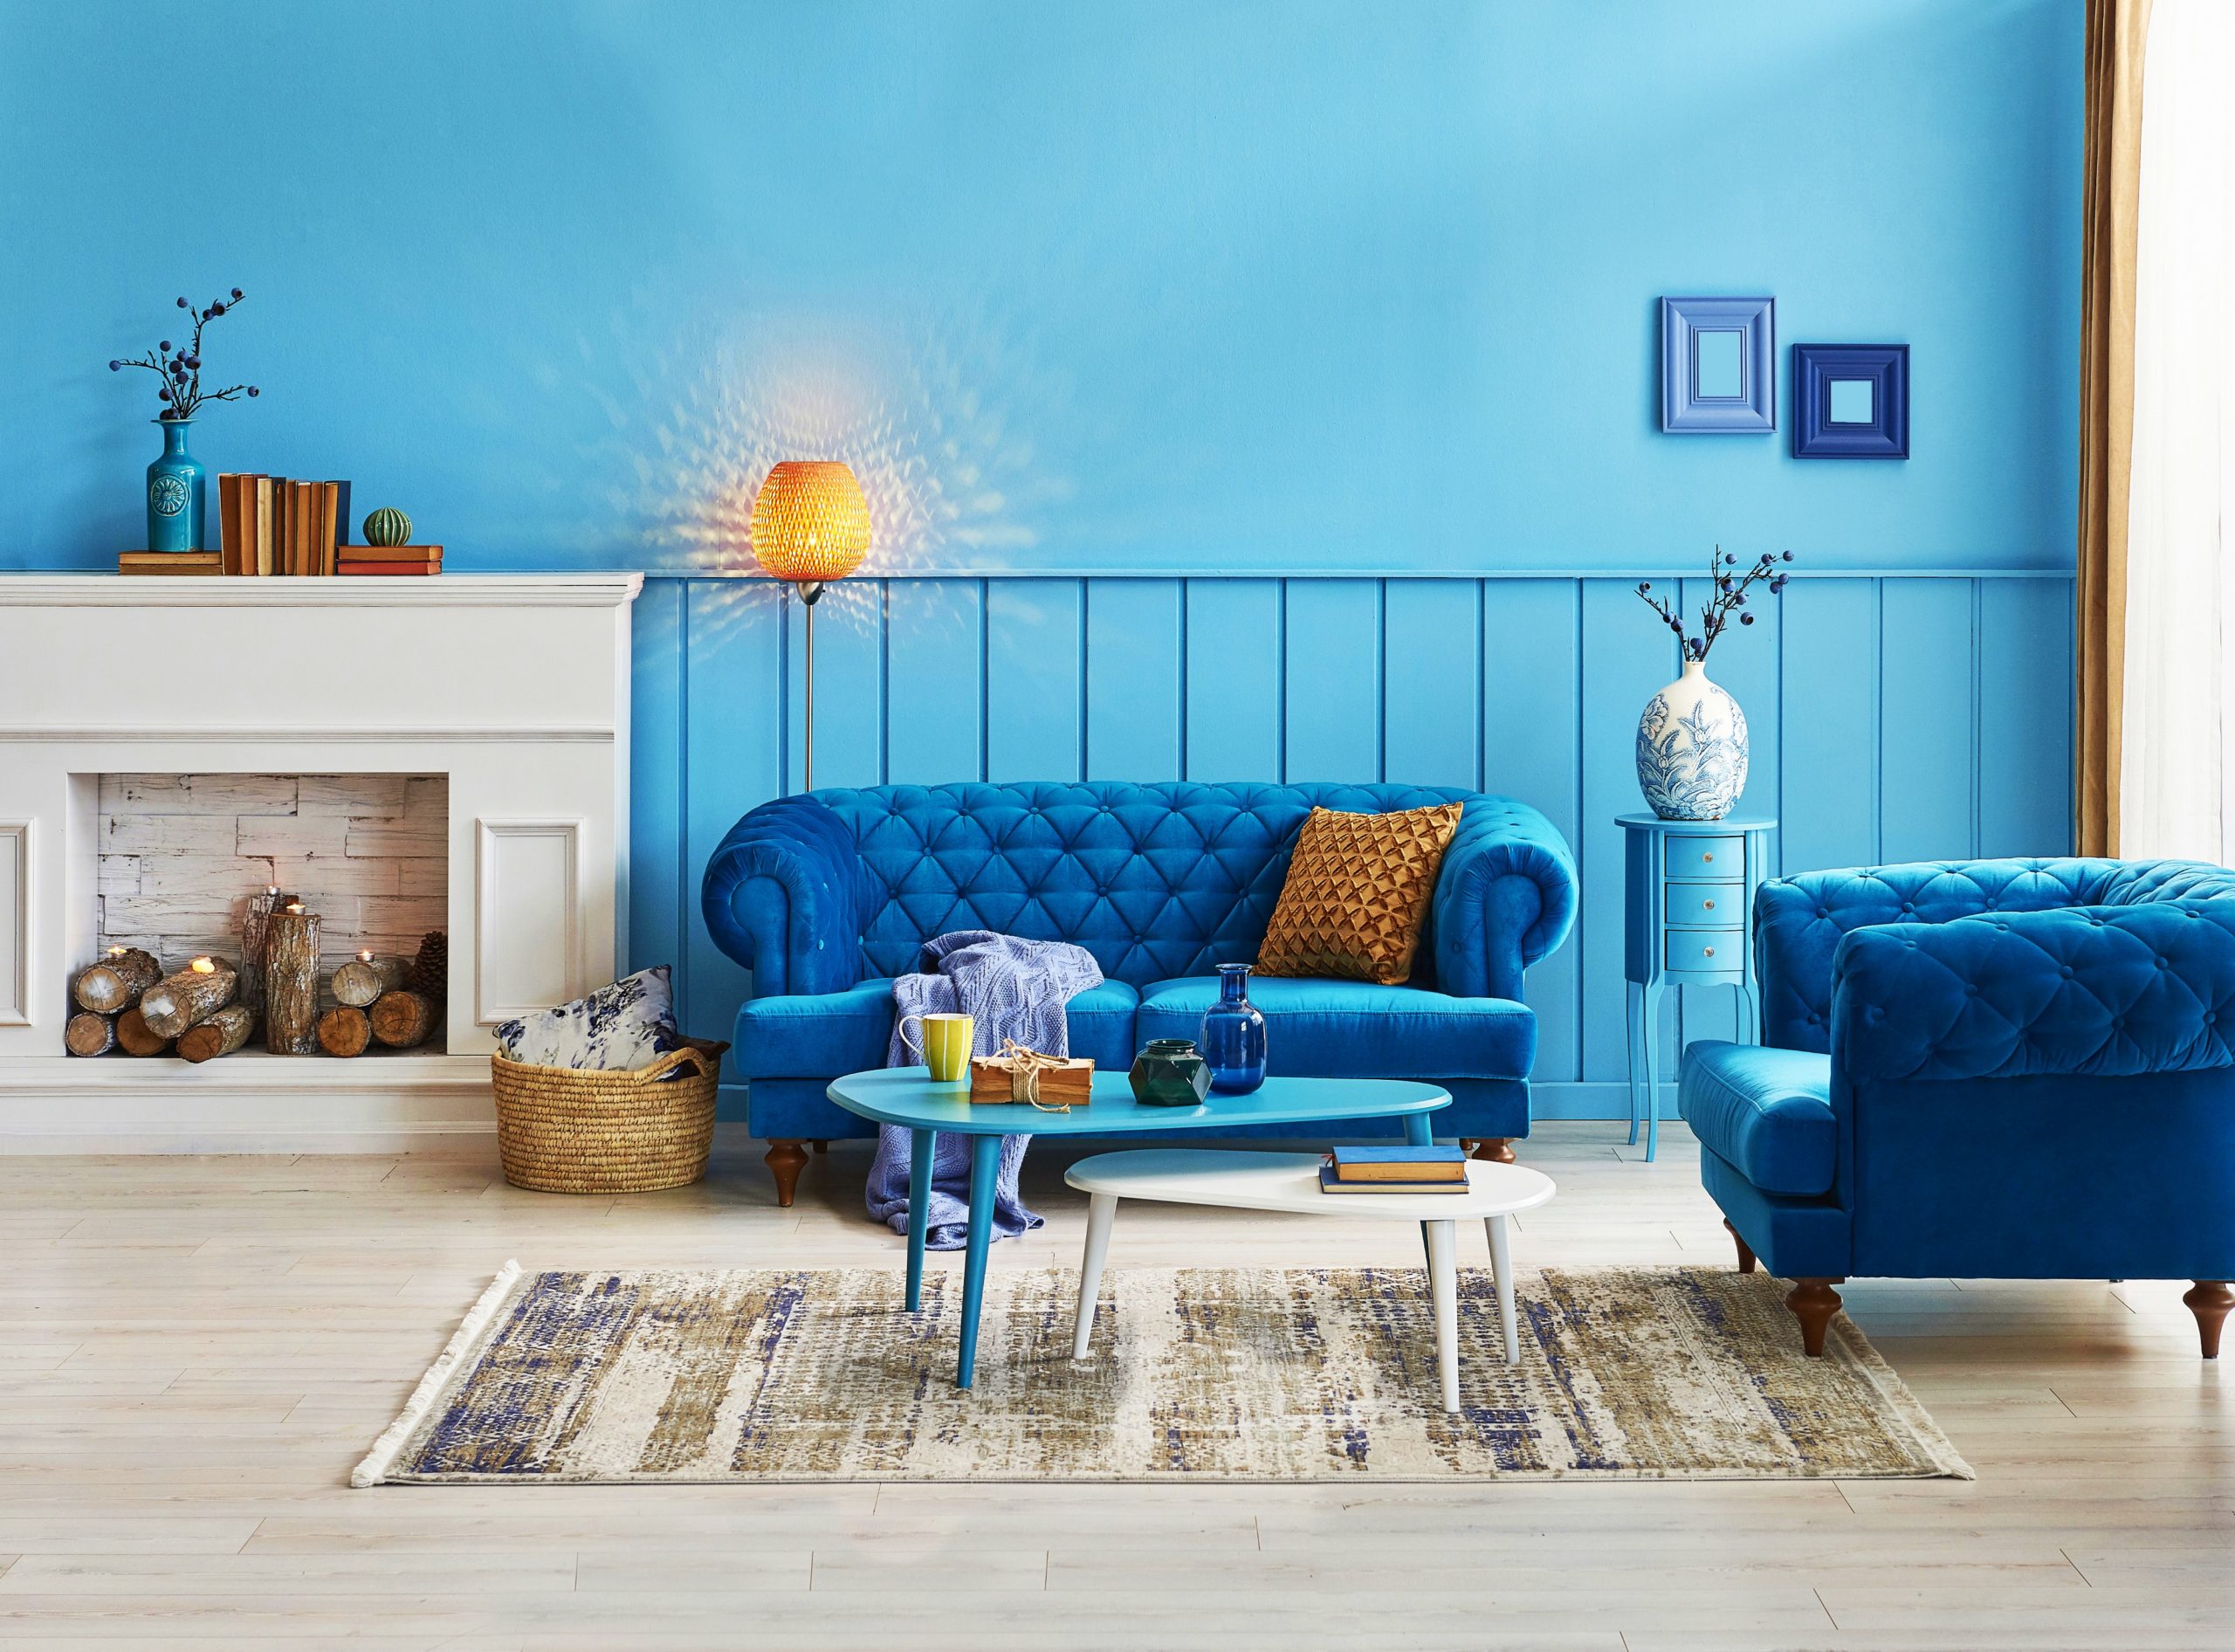 <img src="blue.jpg" alt="blue living room add colour to home"/> 